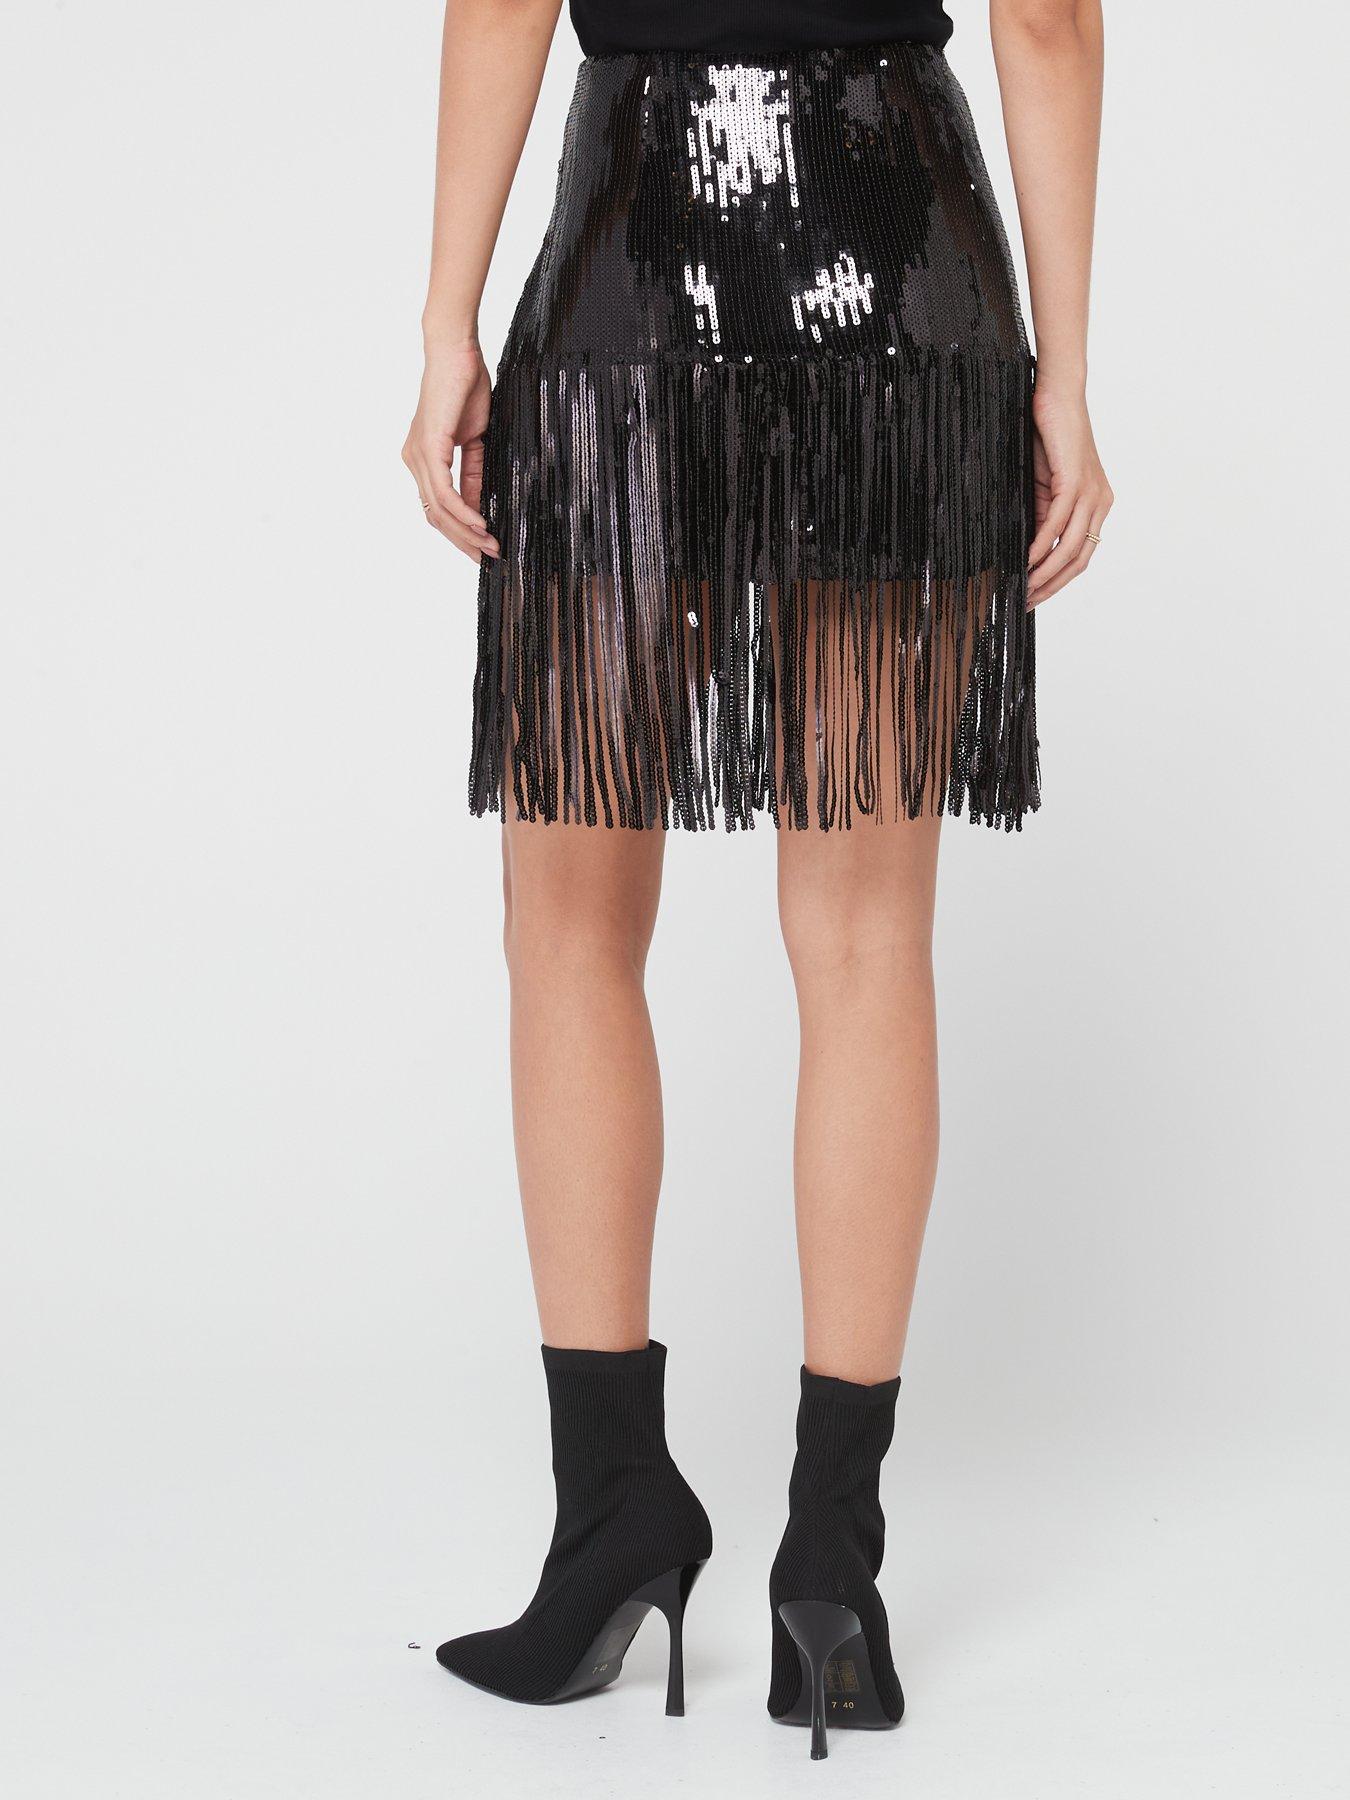 Black Sequin High Waisted Mini Skirt - FINAL SALE